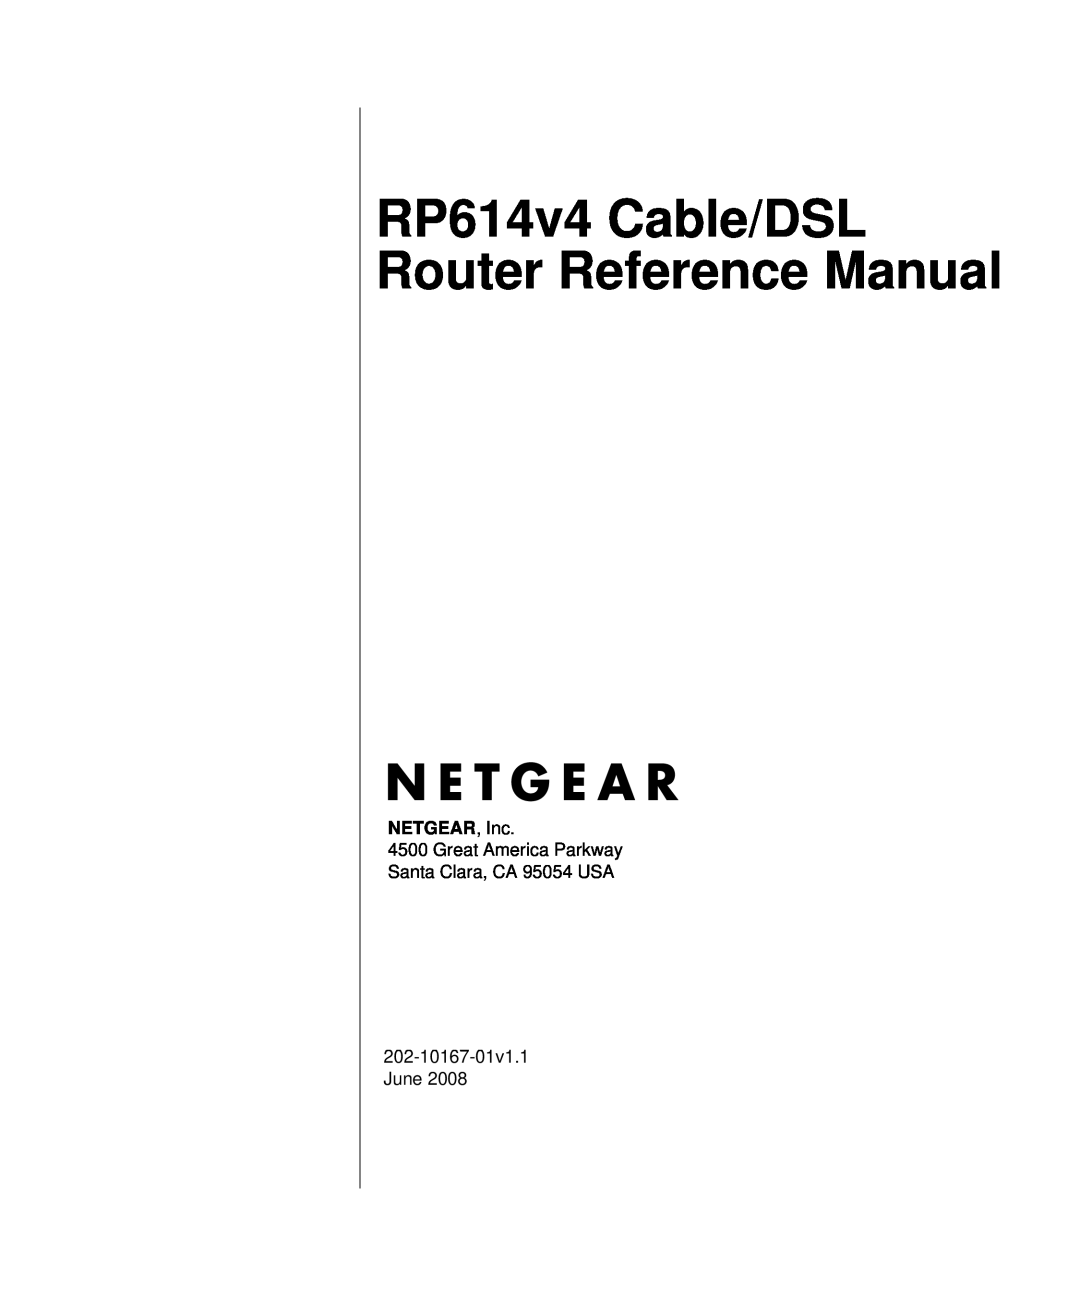 NETGEAR RP614 v4 manual RP614v4 Cable/DSL Router Reference Manual, NETGEAR, Inc 